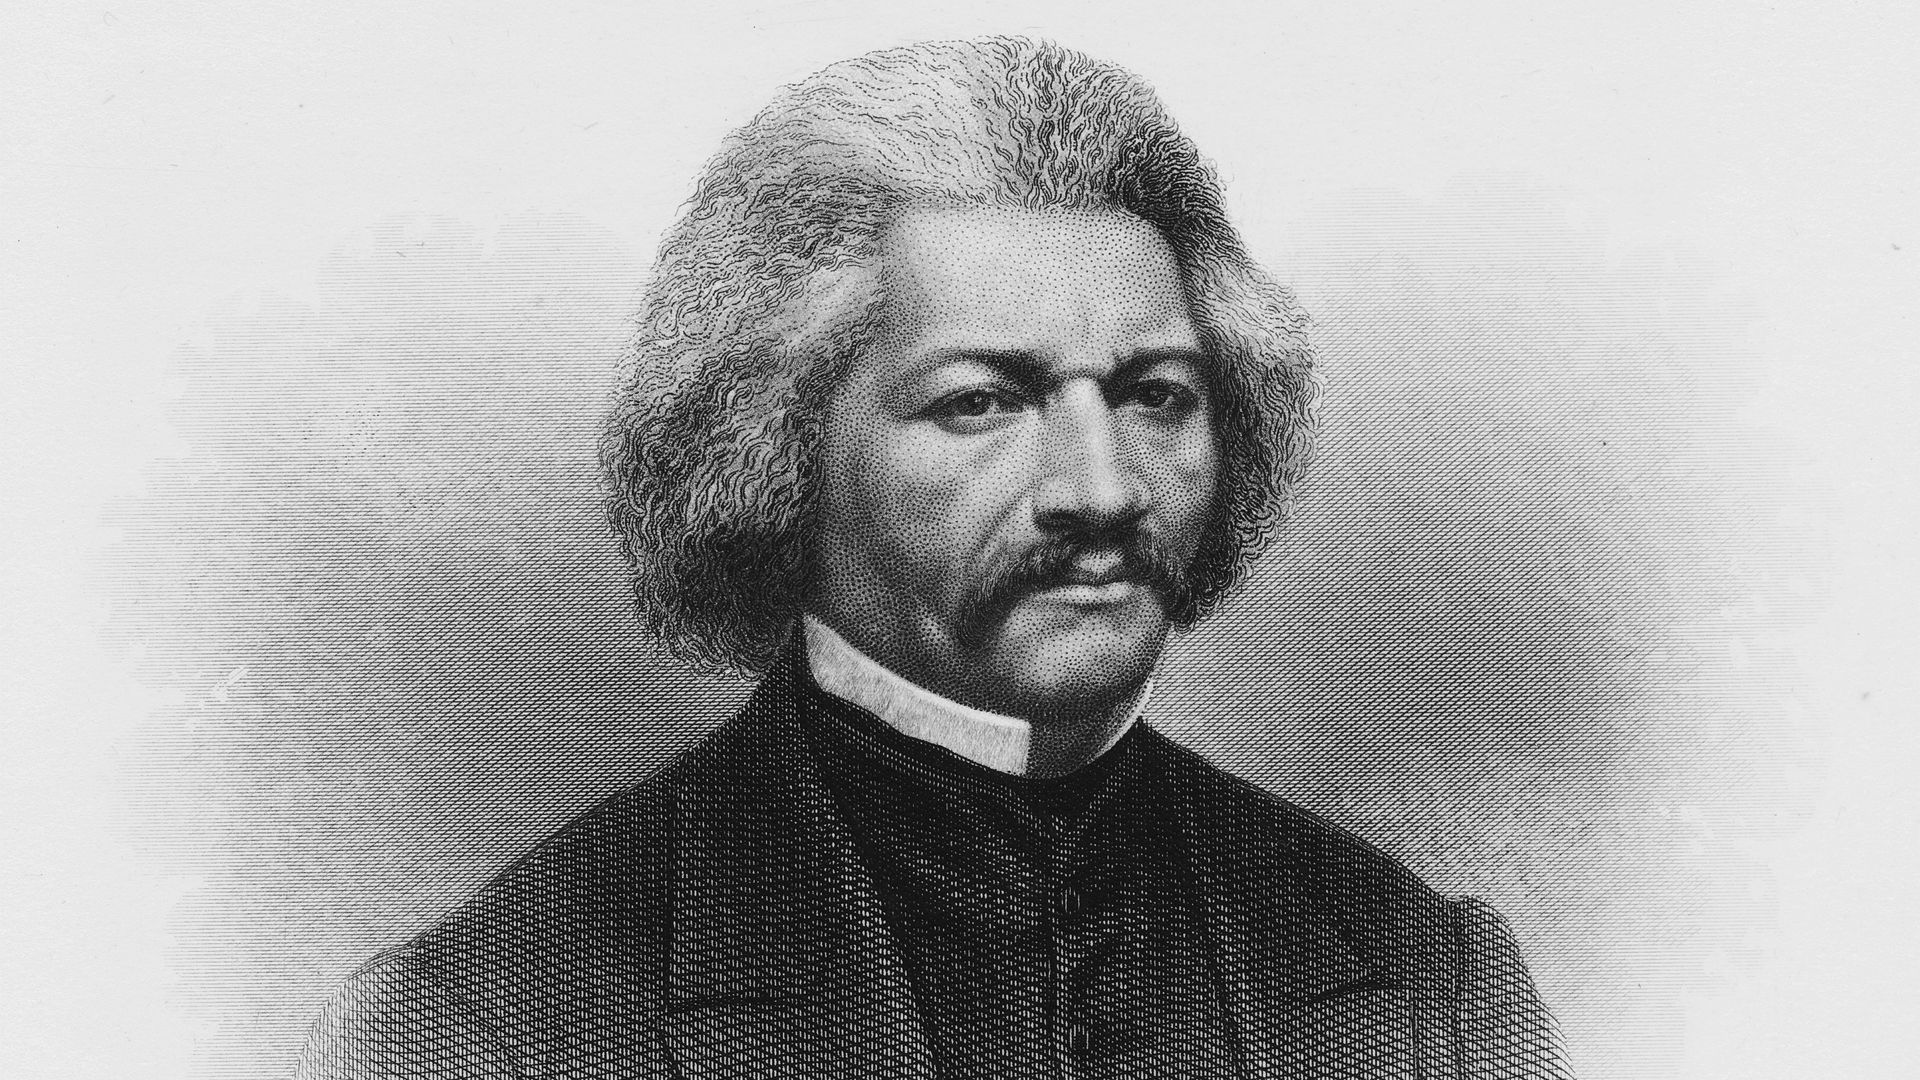 A portrait of Frederick Douglass